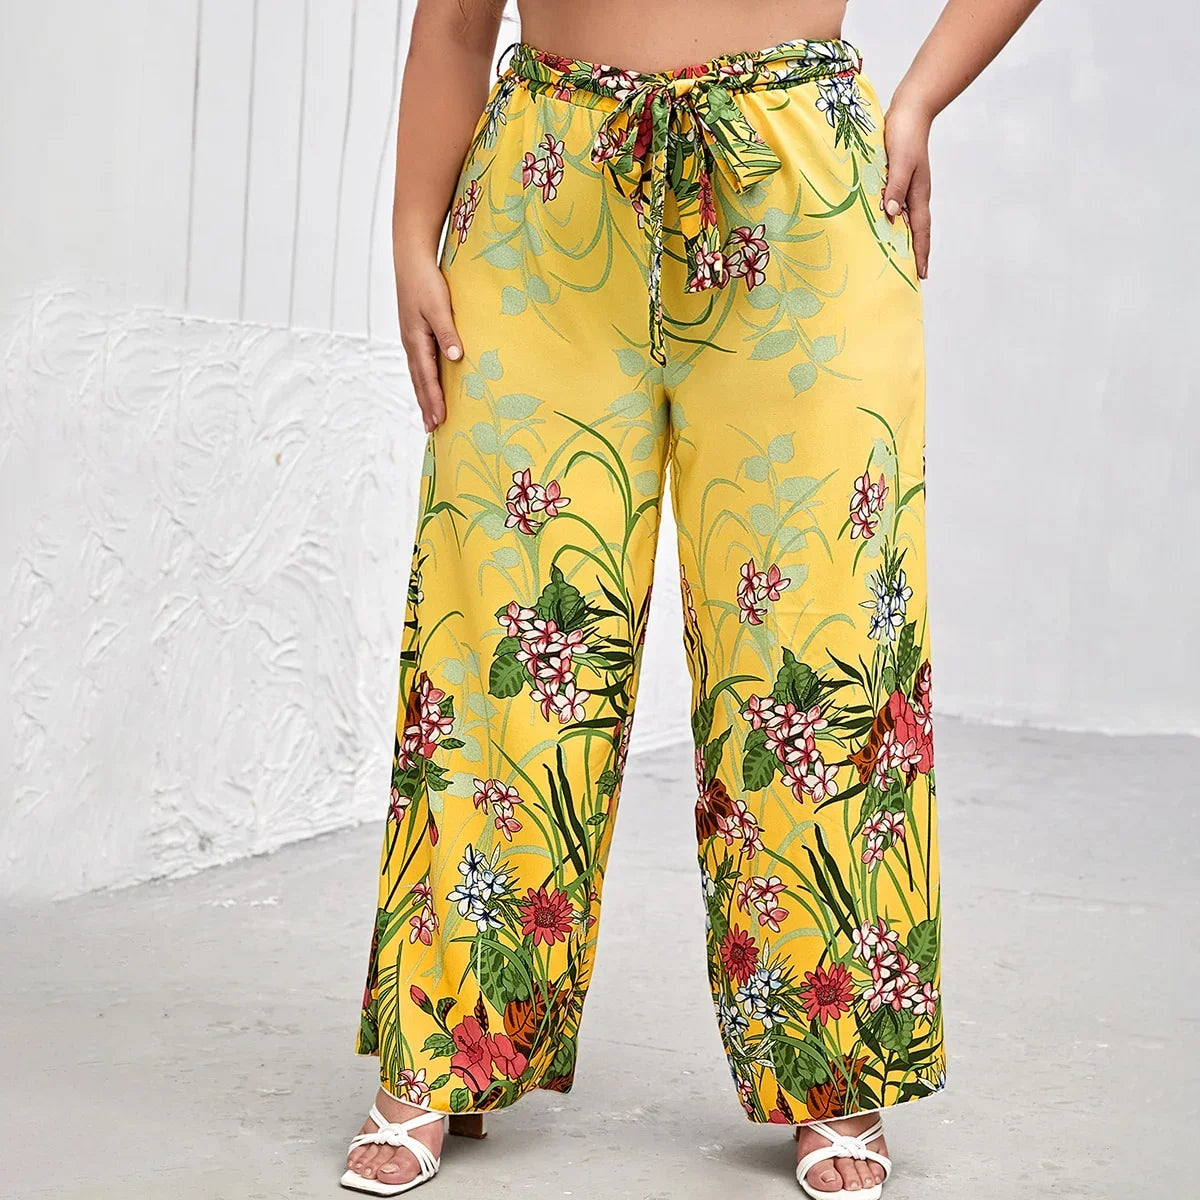 Plus Size Floral Print Summer Elegant Wide Leg Pants Elastic Waist Sashes Casual Yellow Boho Pants Trousers Large Size 6XL 7XL